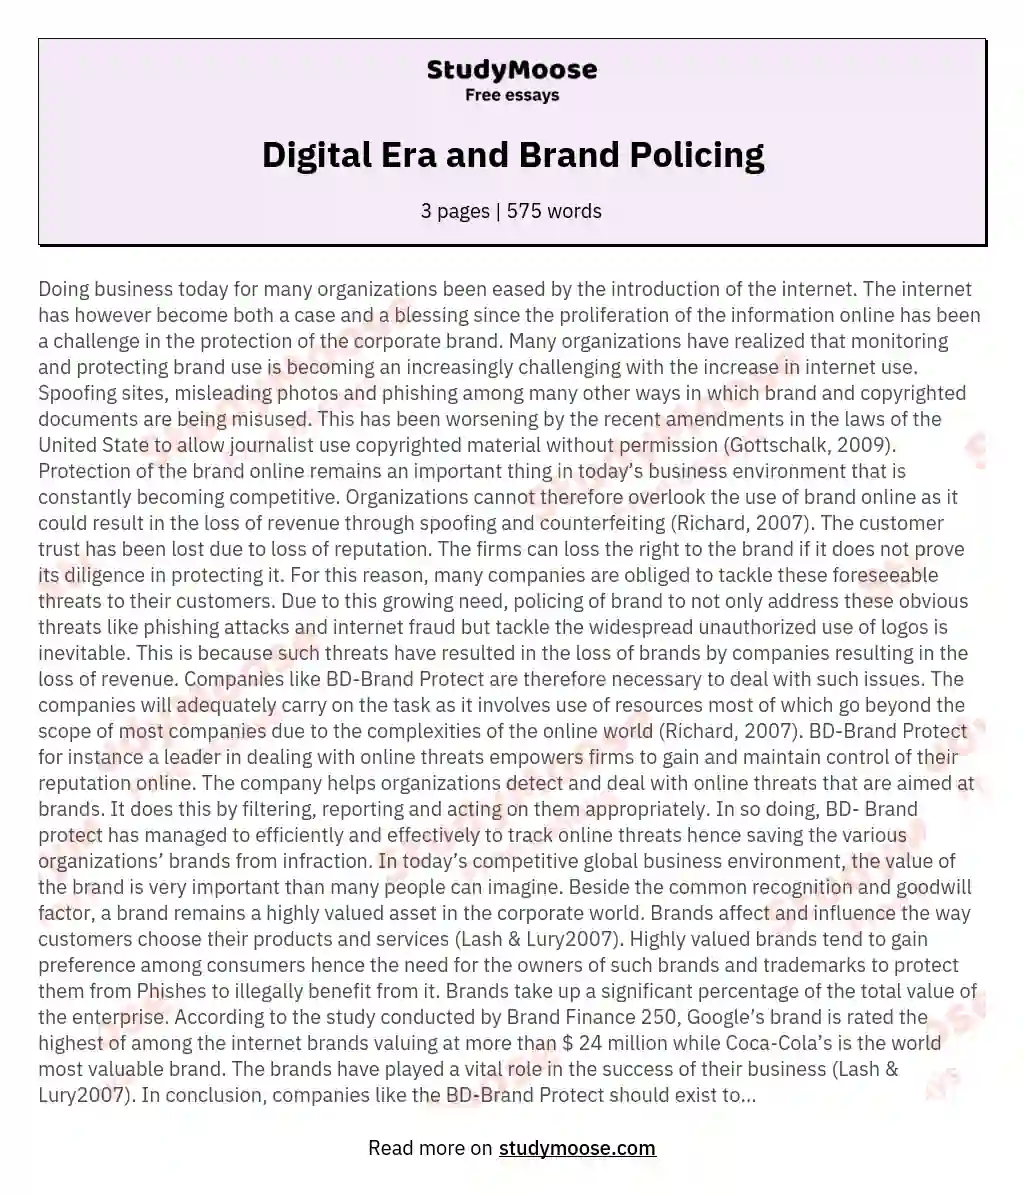 Digital Era and Brand Policing